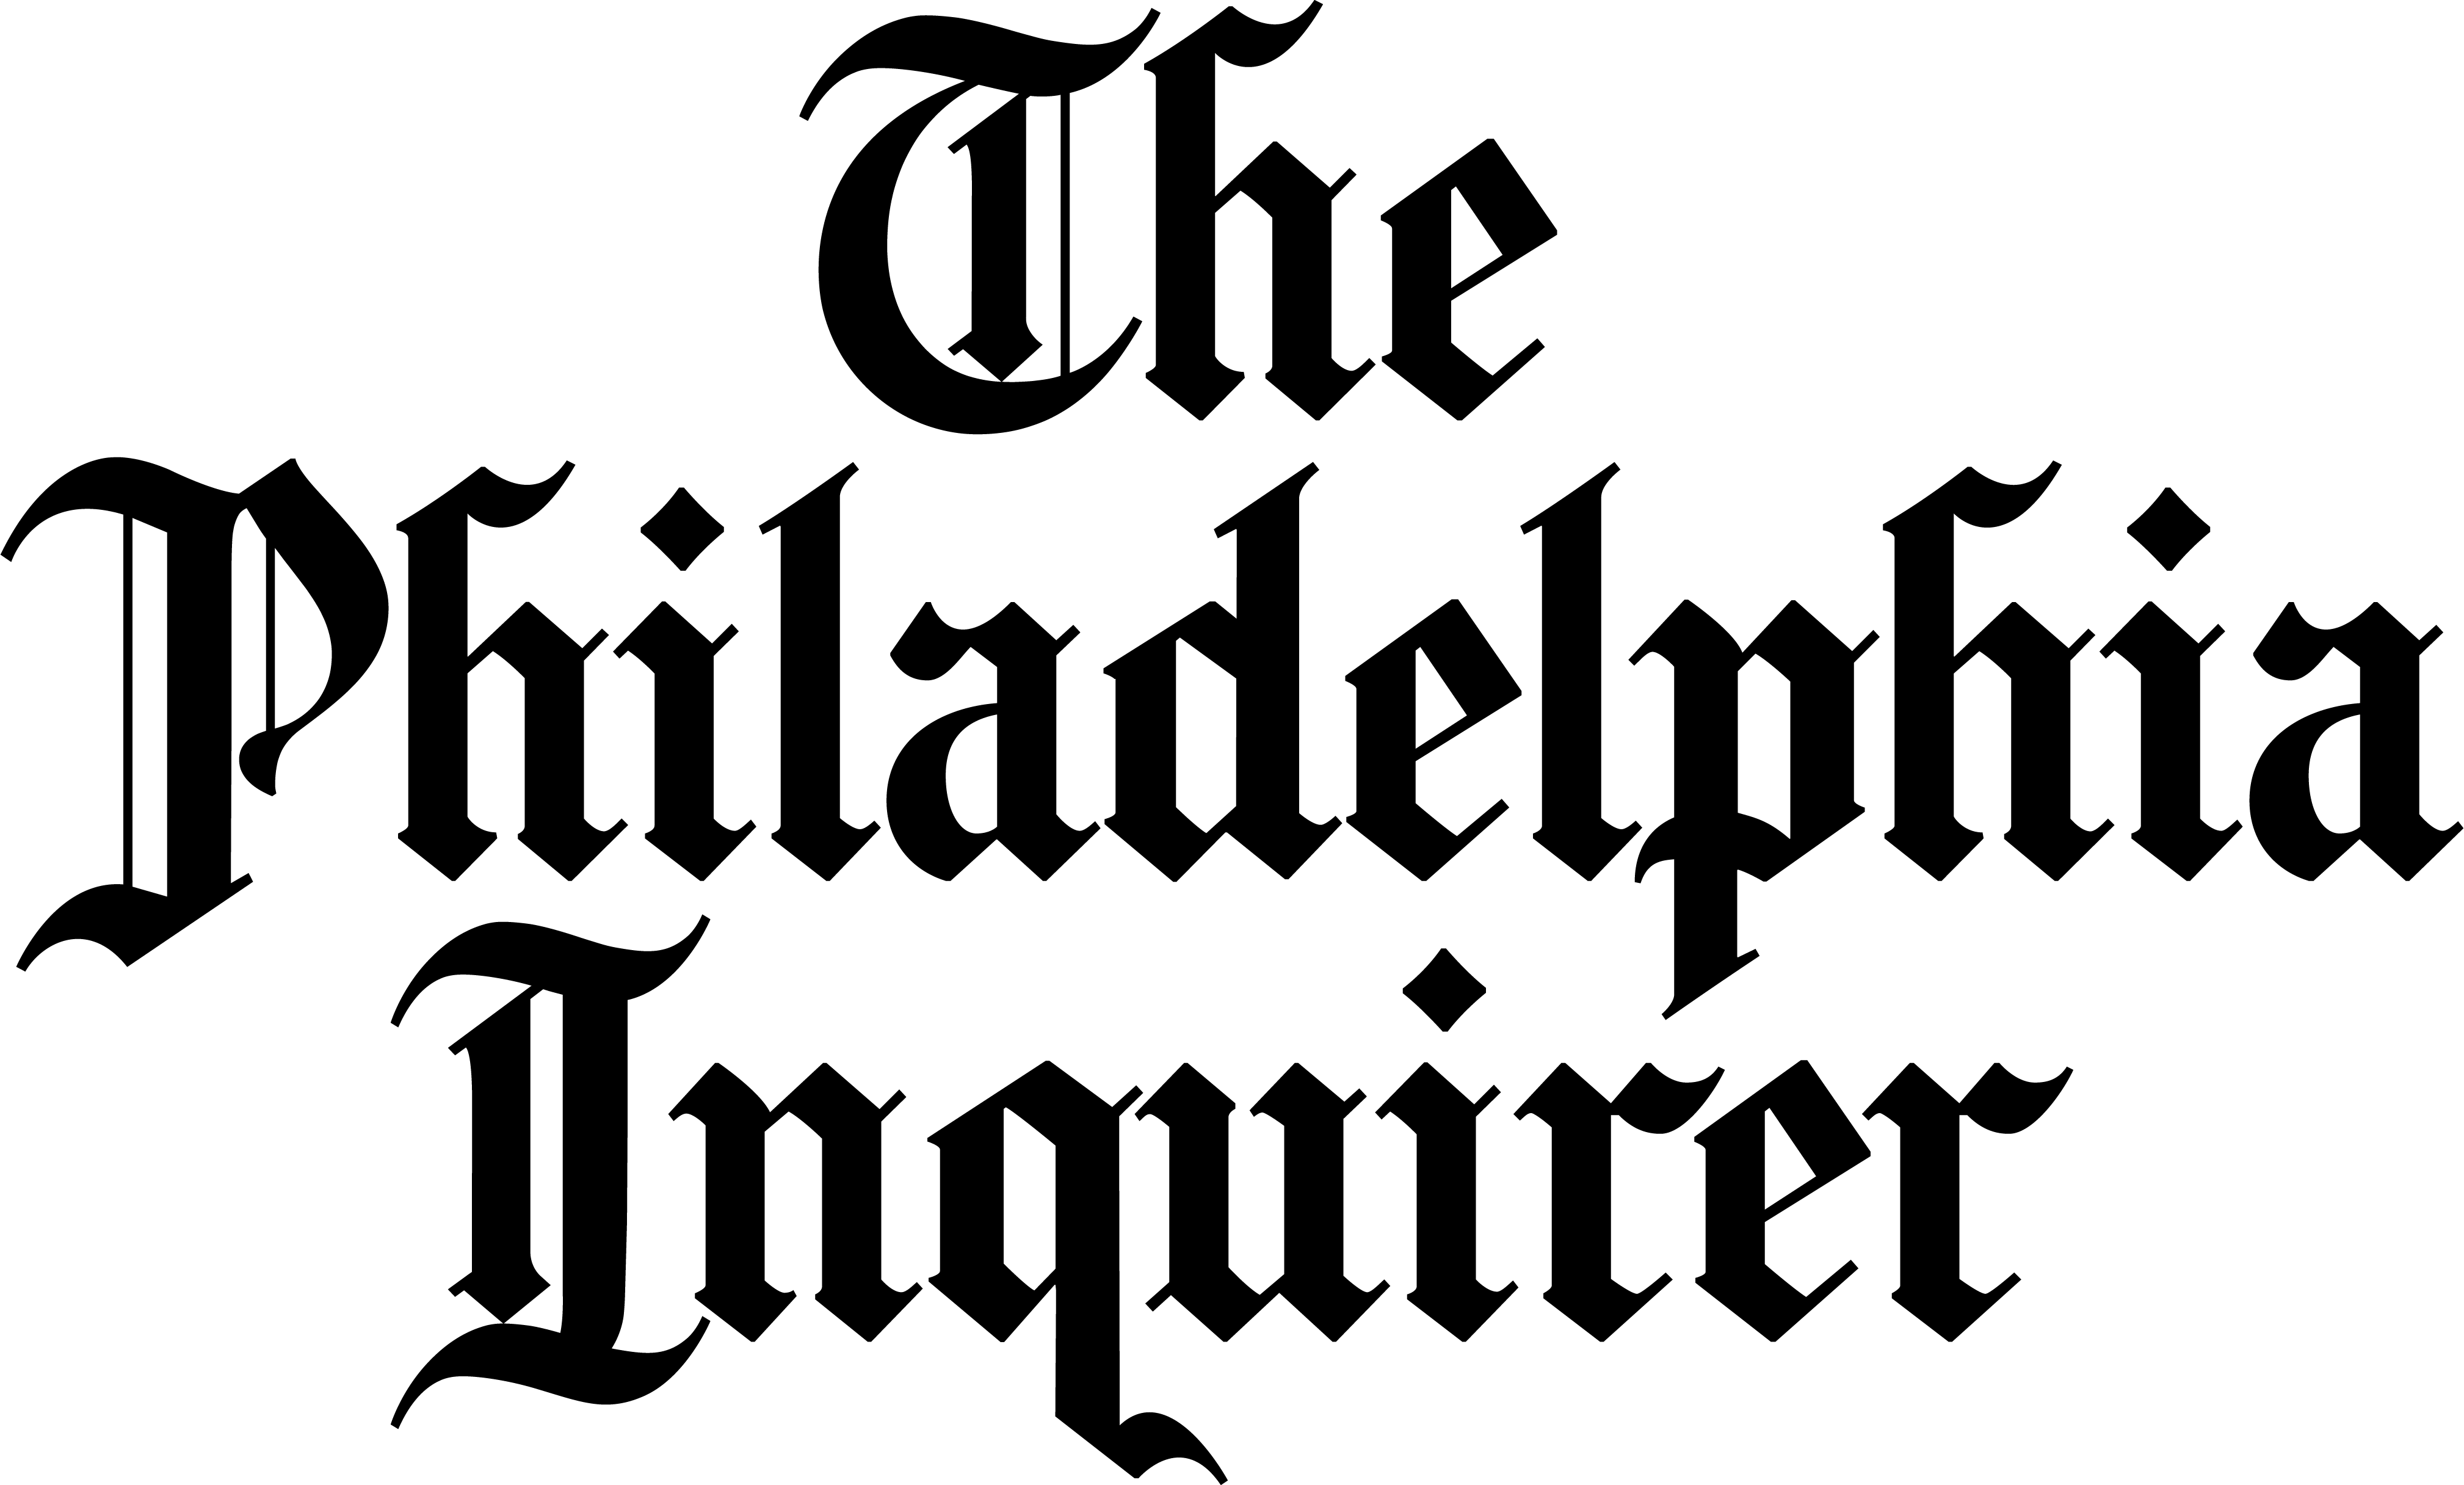 The logo of the philadelphia inquirer in elegant, decorative black script on a white background.